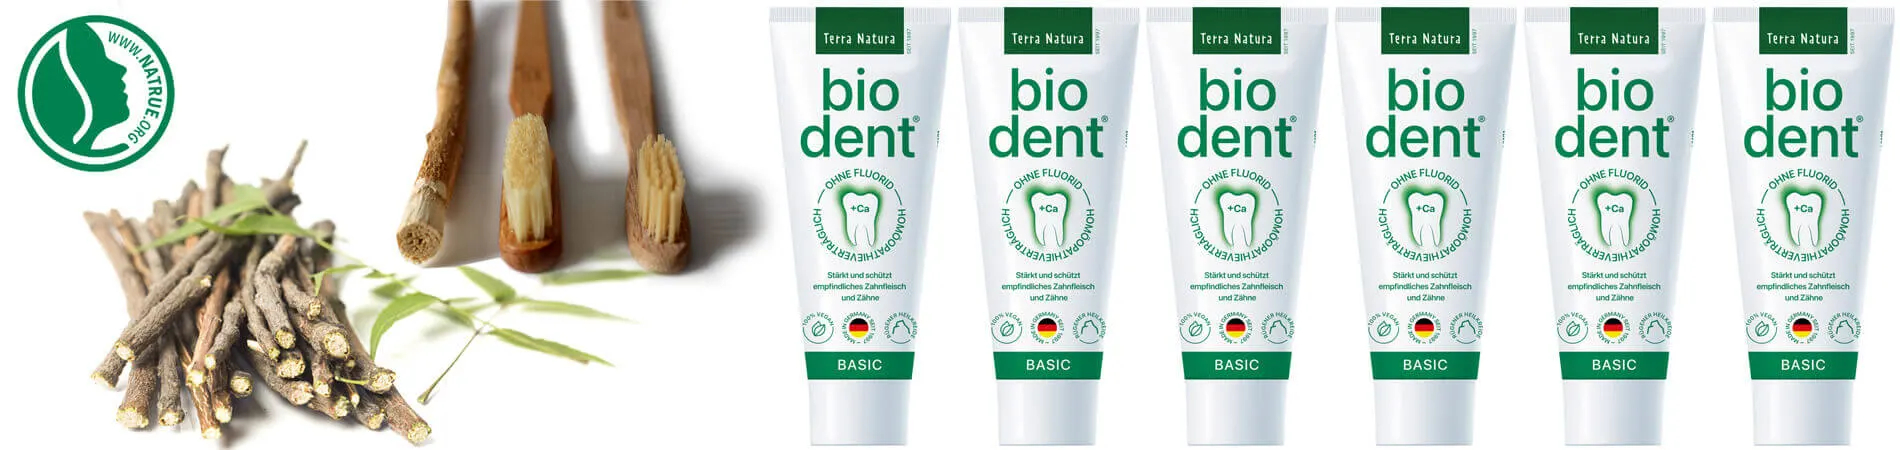 Biodent Basics Pasta de dientes sin fluor comprar Bio...